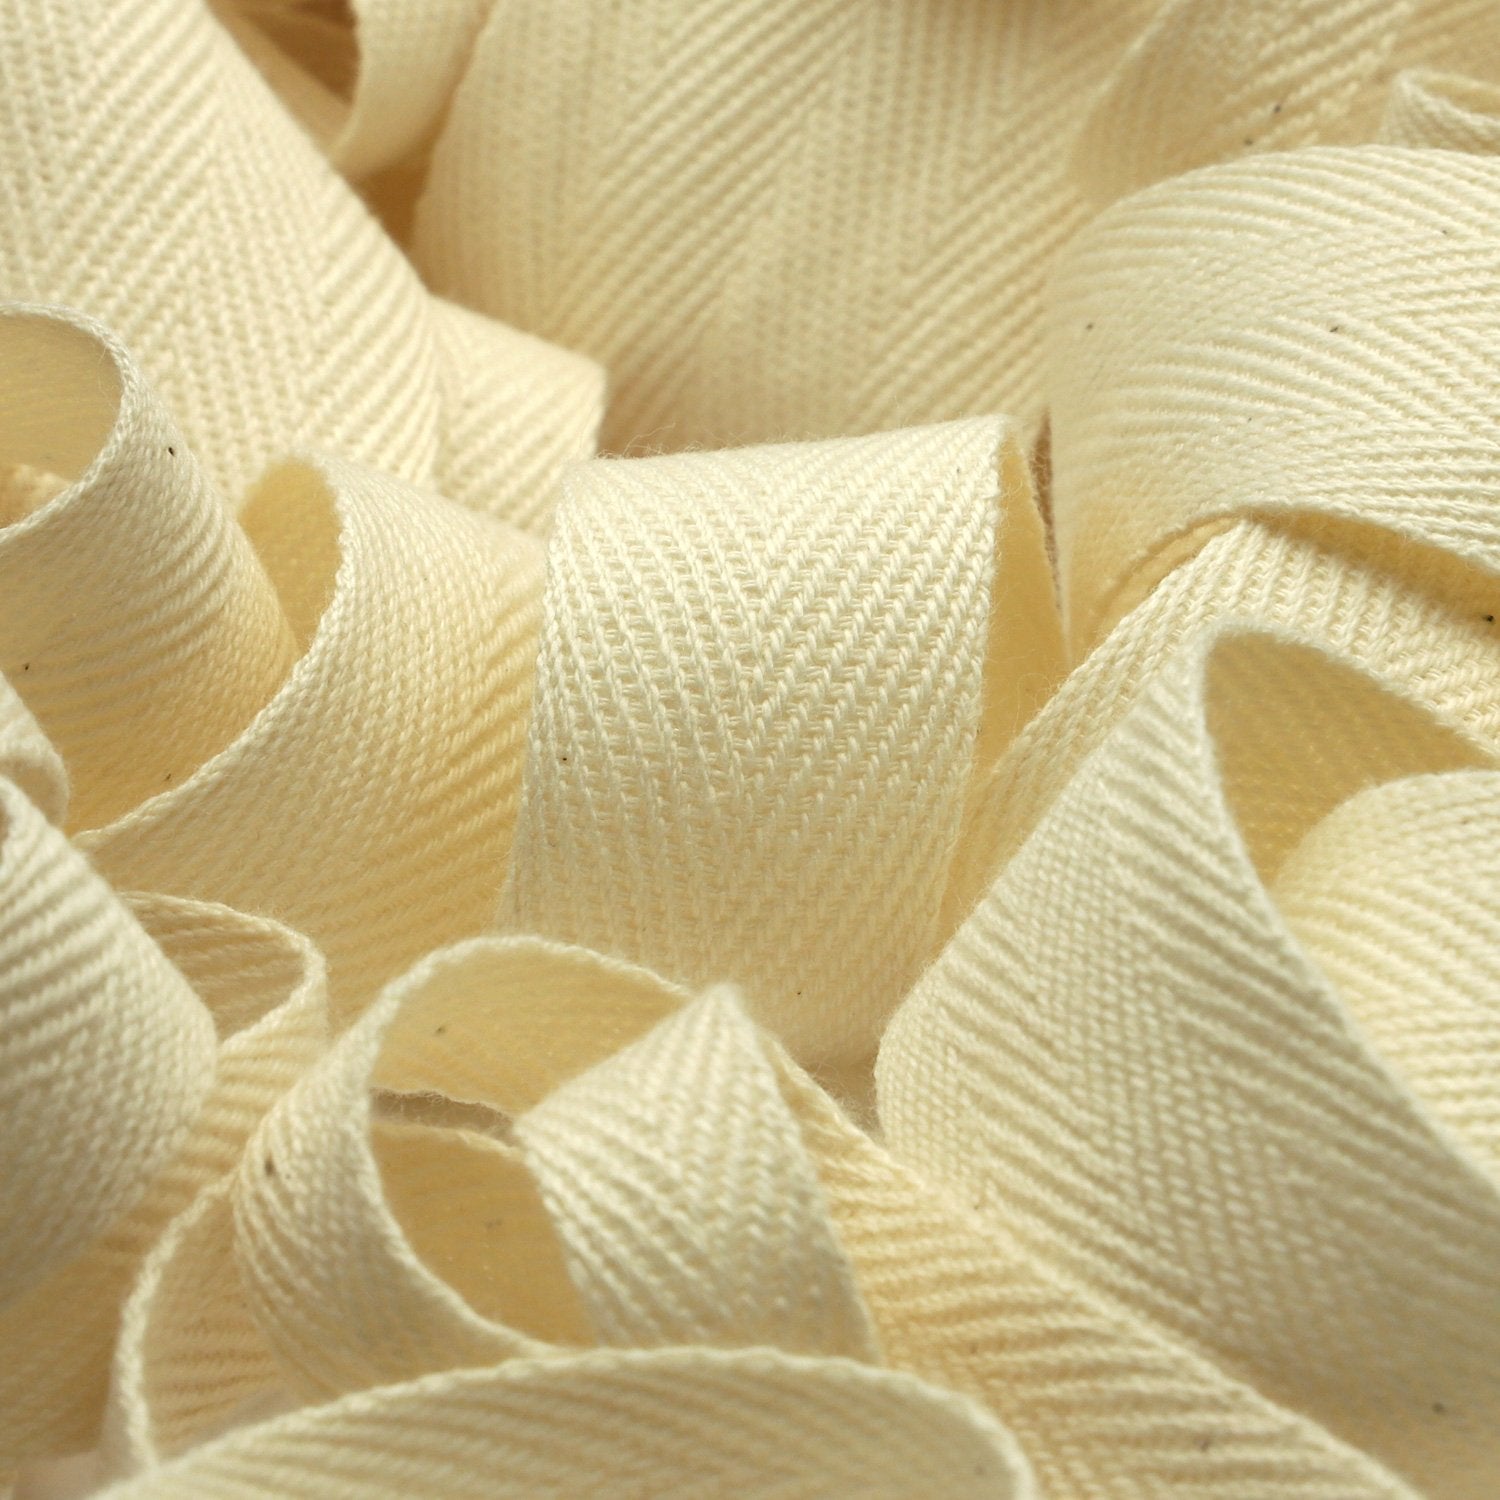 FUJIYAMA RIBBON [Wholesale] Organic Cotton Herringbone Ribbon 10mm Ecru 30 Meters Roll